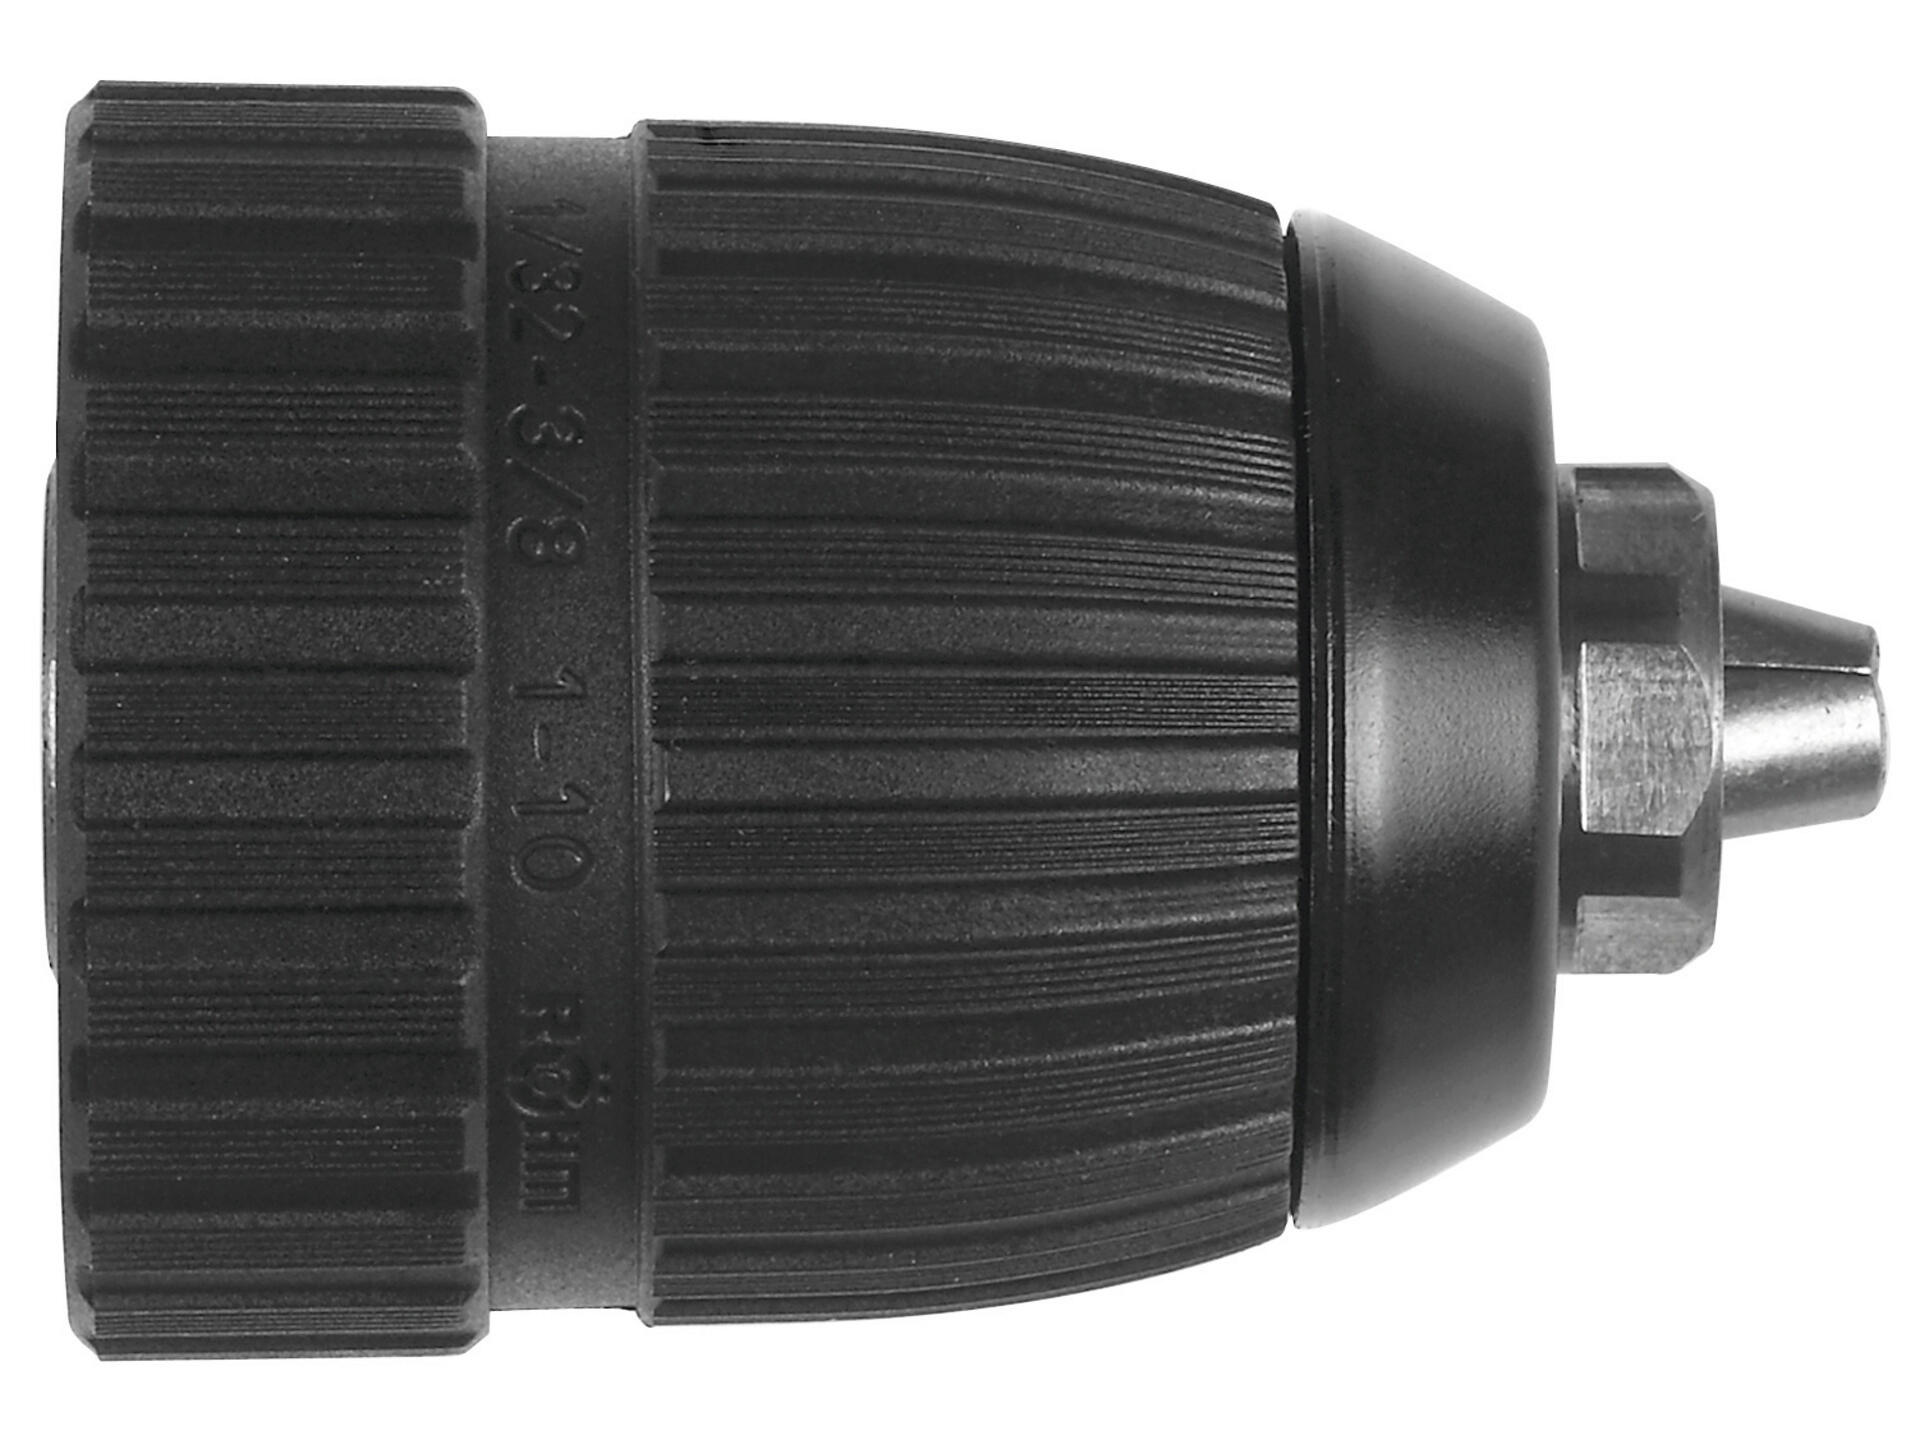 Bosch snelspanboorhouder 3/8" 1-10 mm